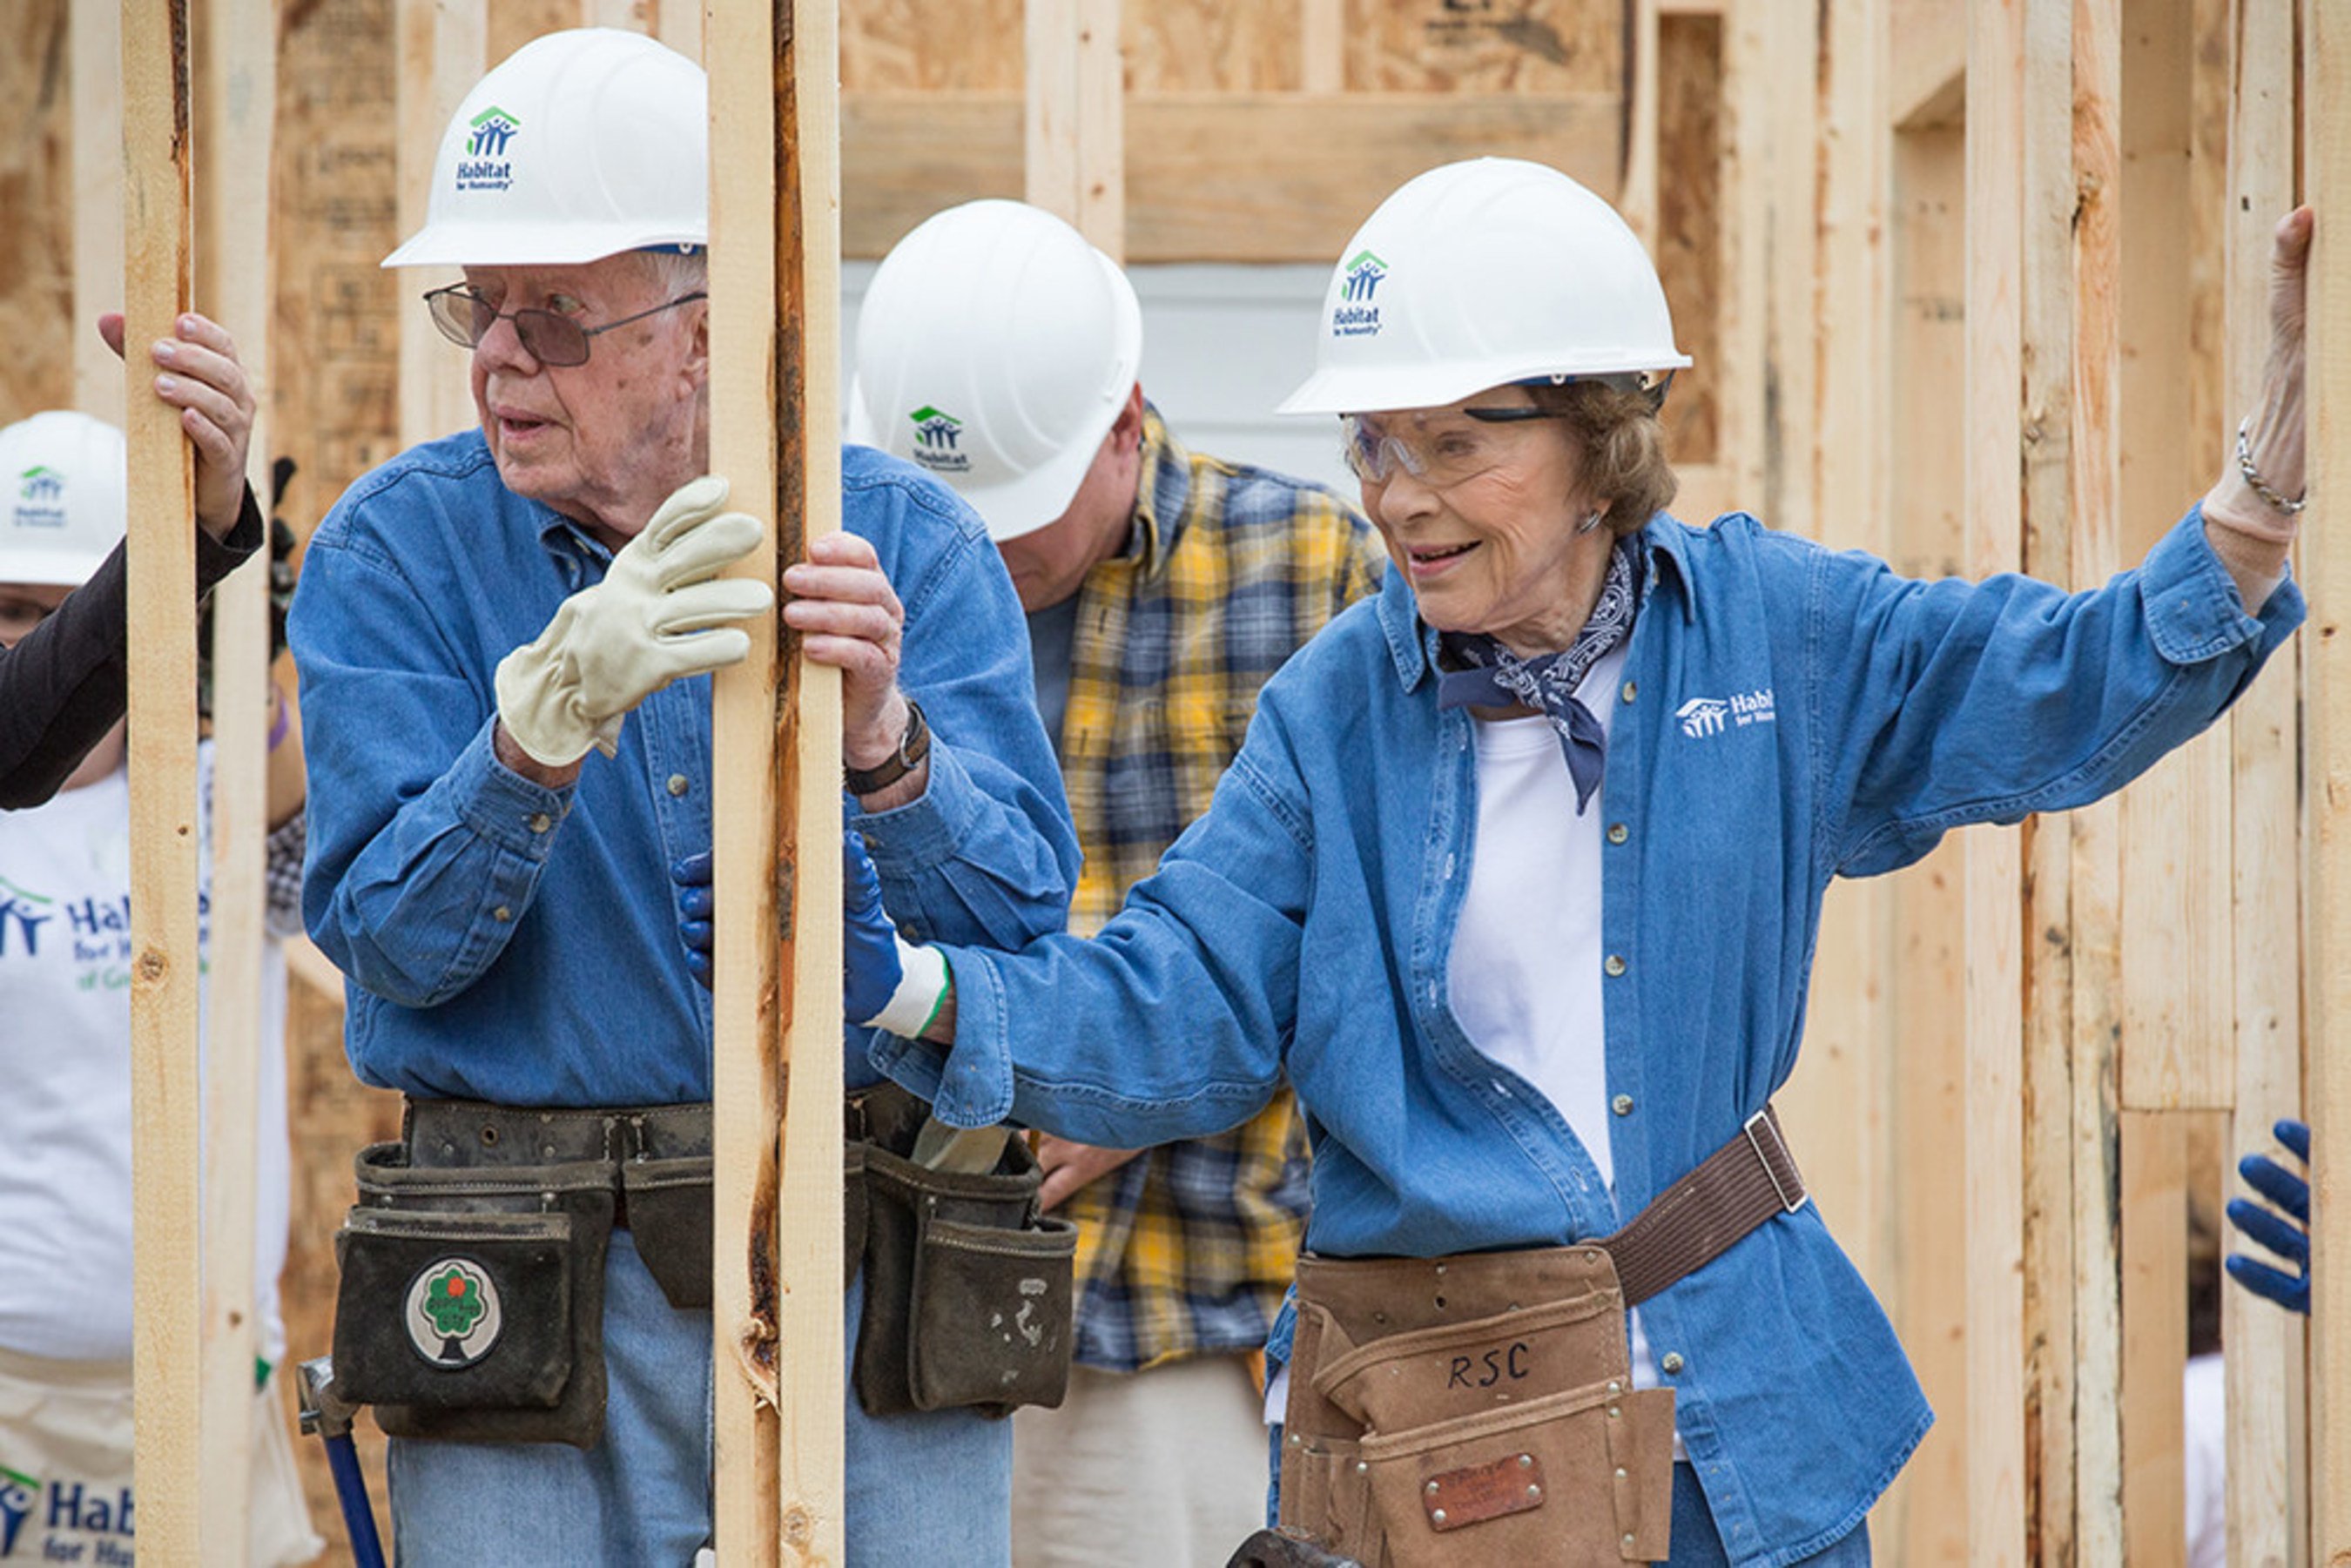 Jimmy i Rosalynn Carter construeixen cases